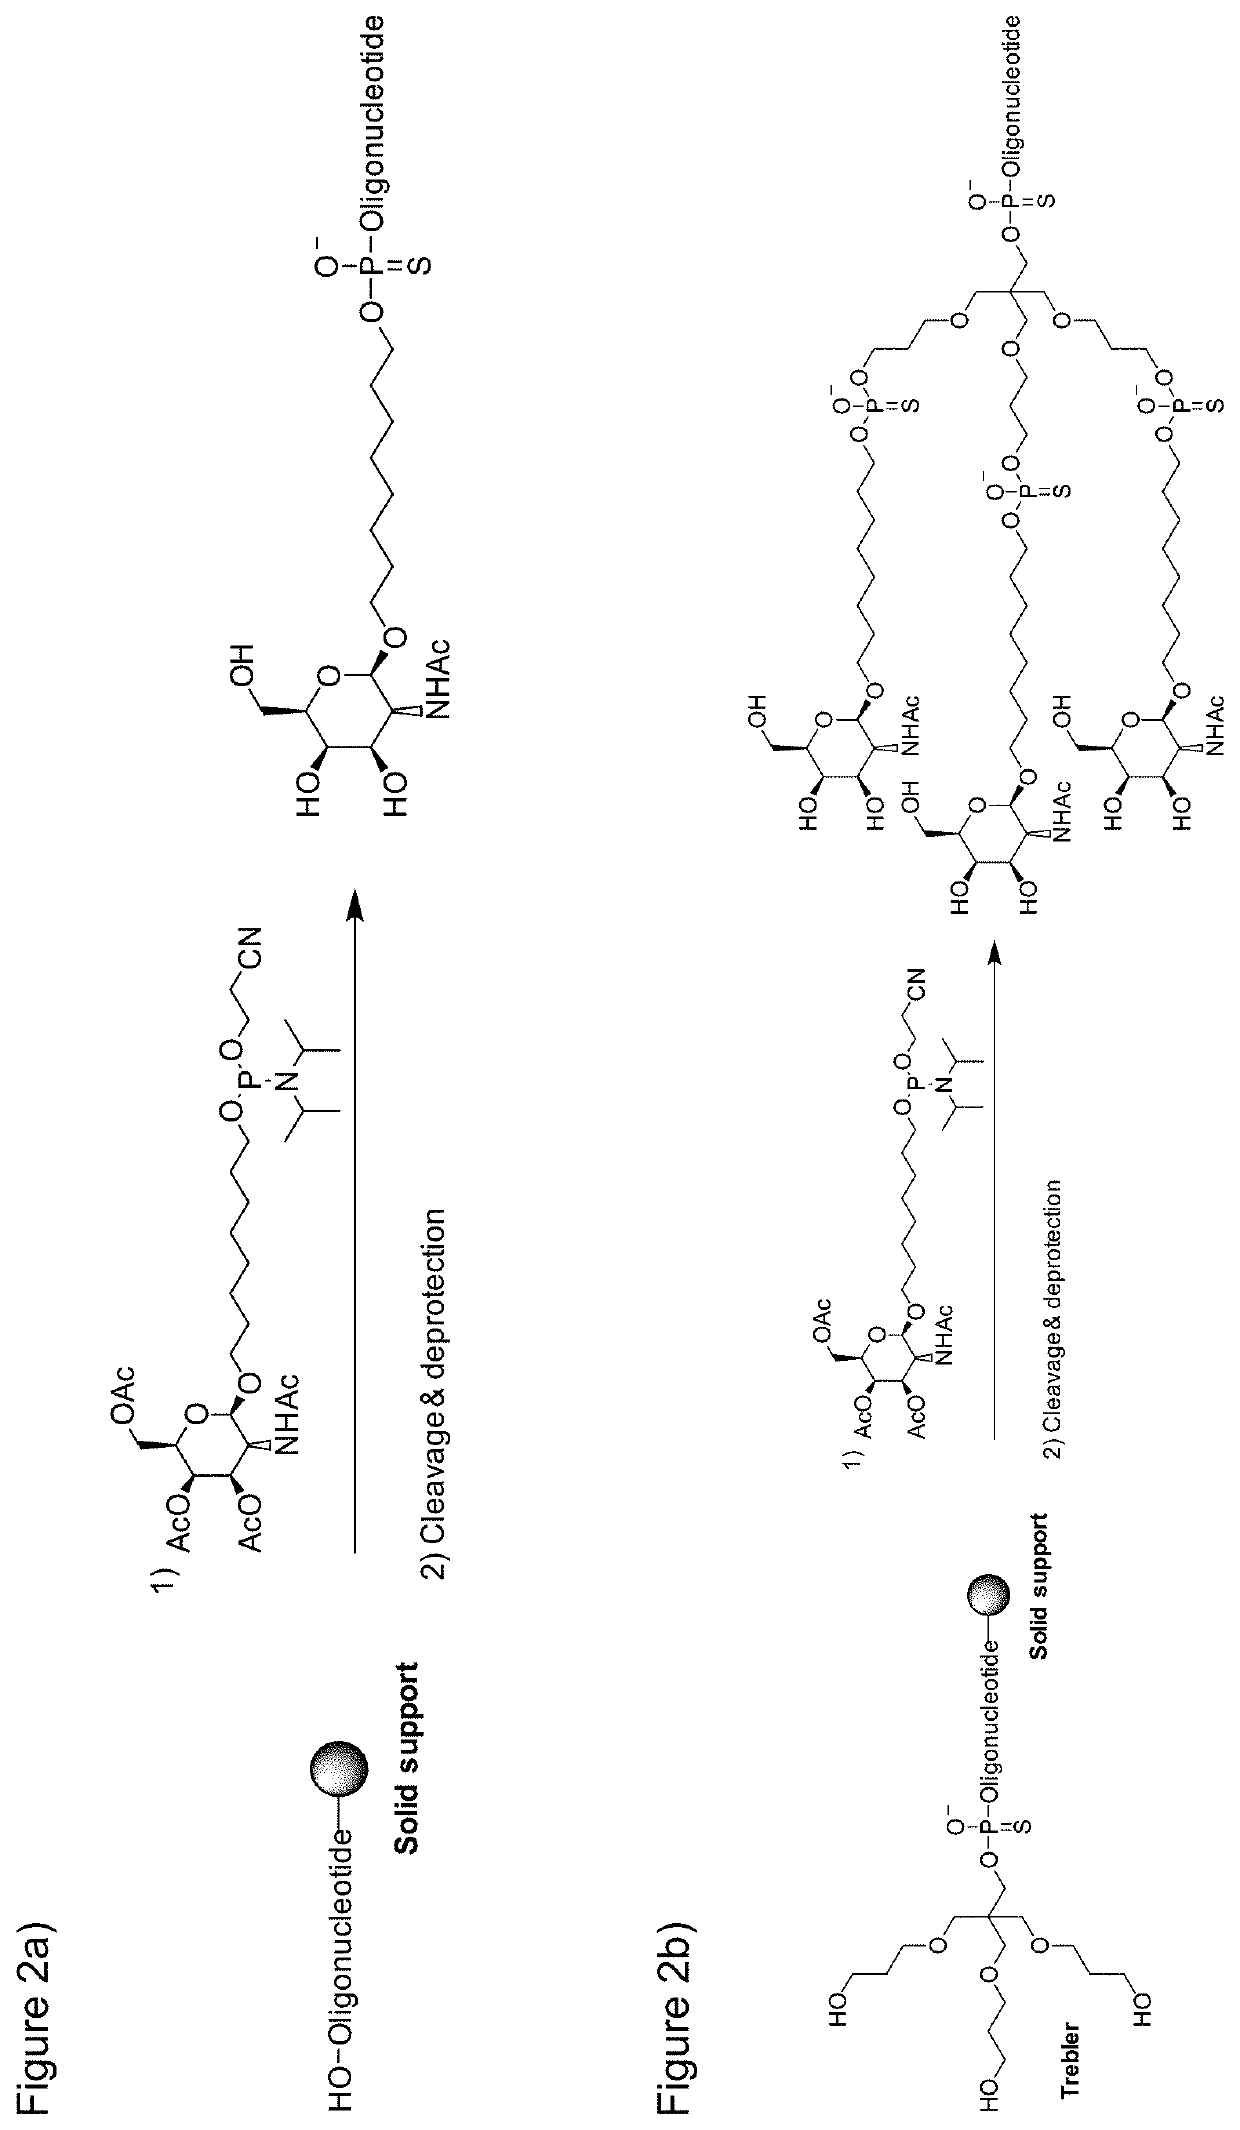 Galnac phosphoramidites, nucleic acid conjugates thereof and their use